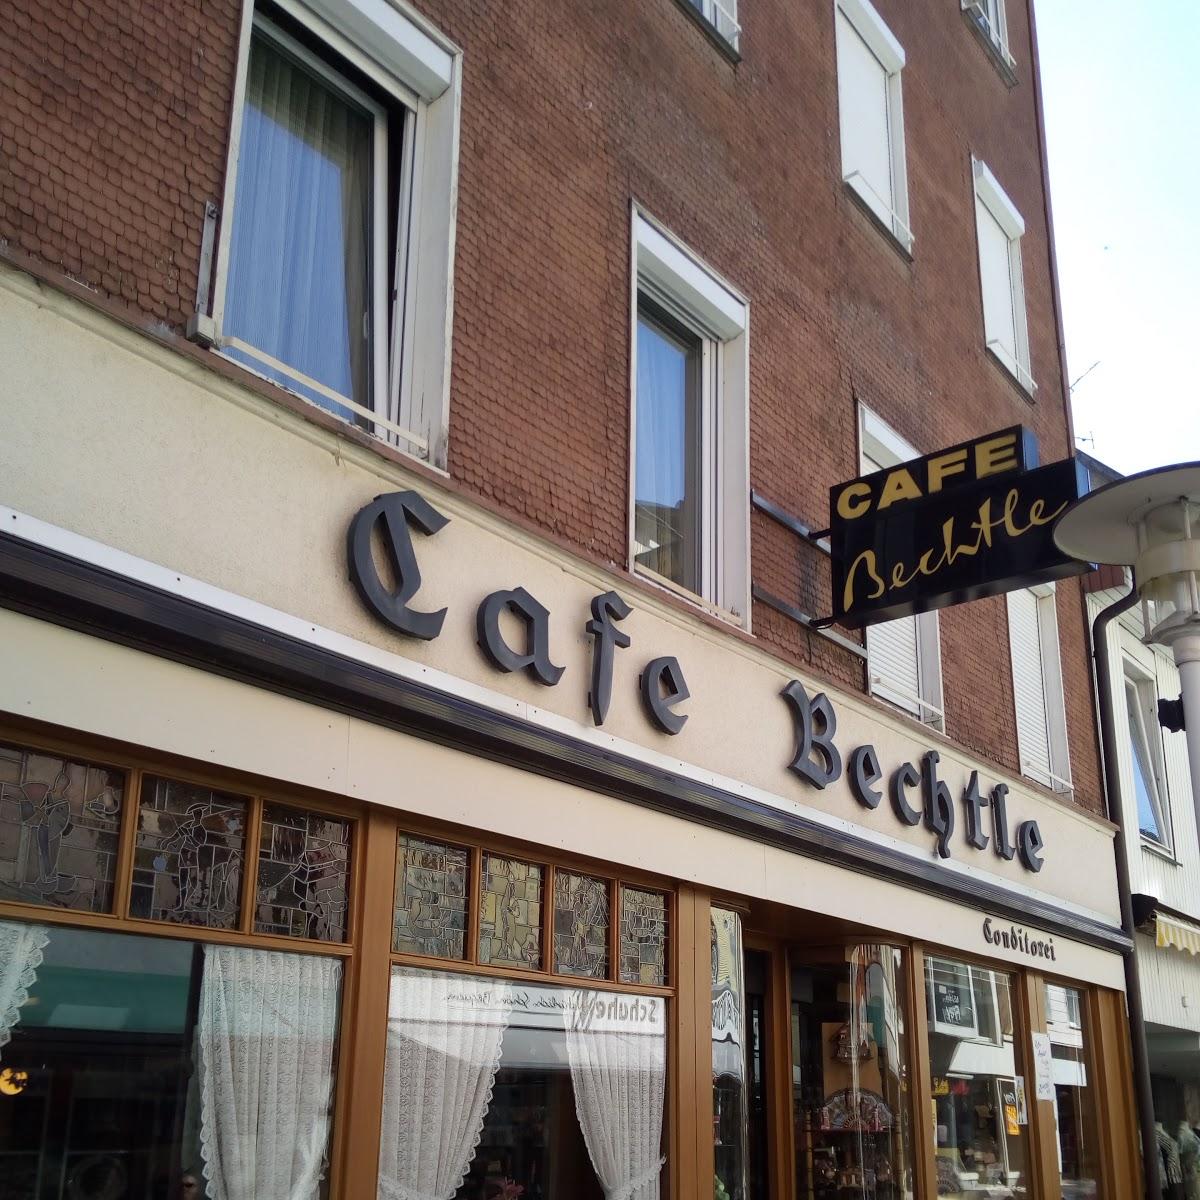 Restaurant "Cafe Bellevue" in  Wildbad